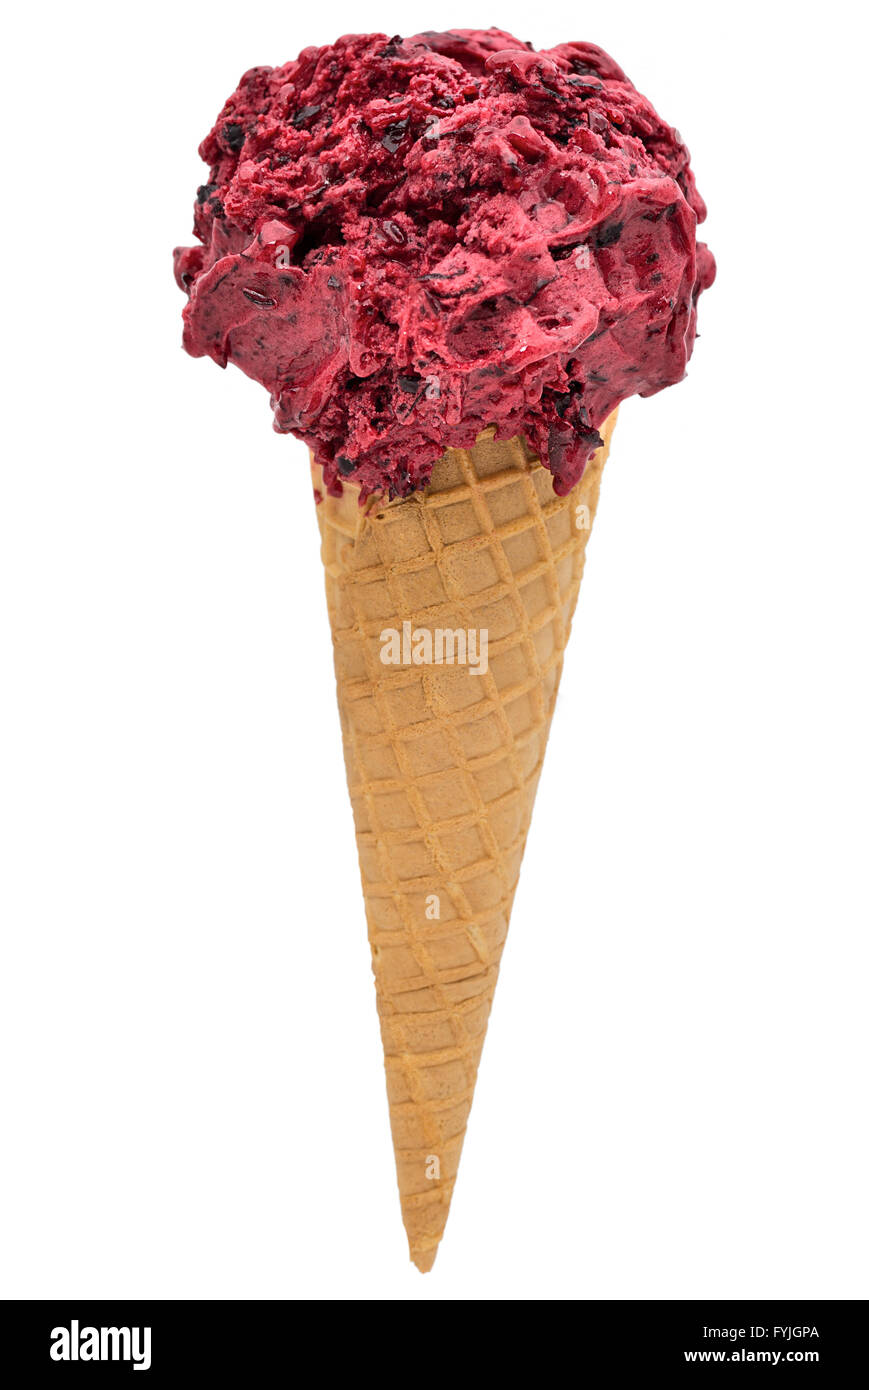 flavored ice cream berries Stock Photo